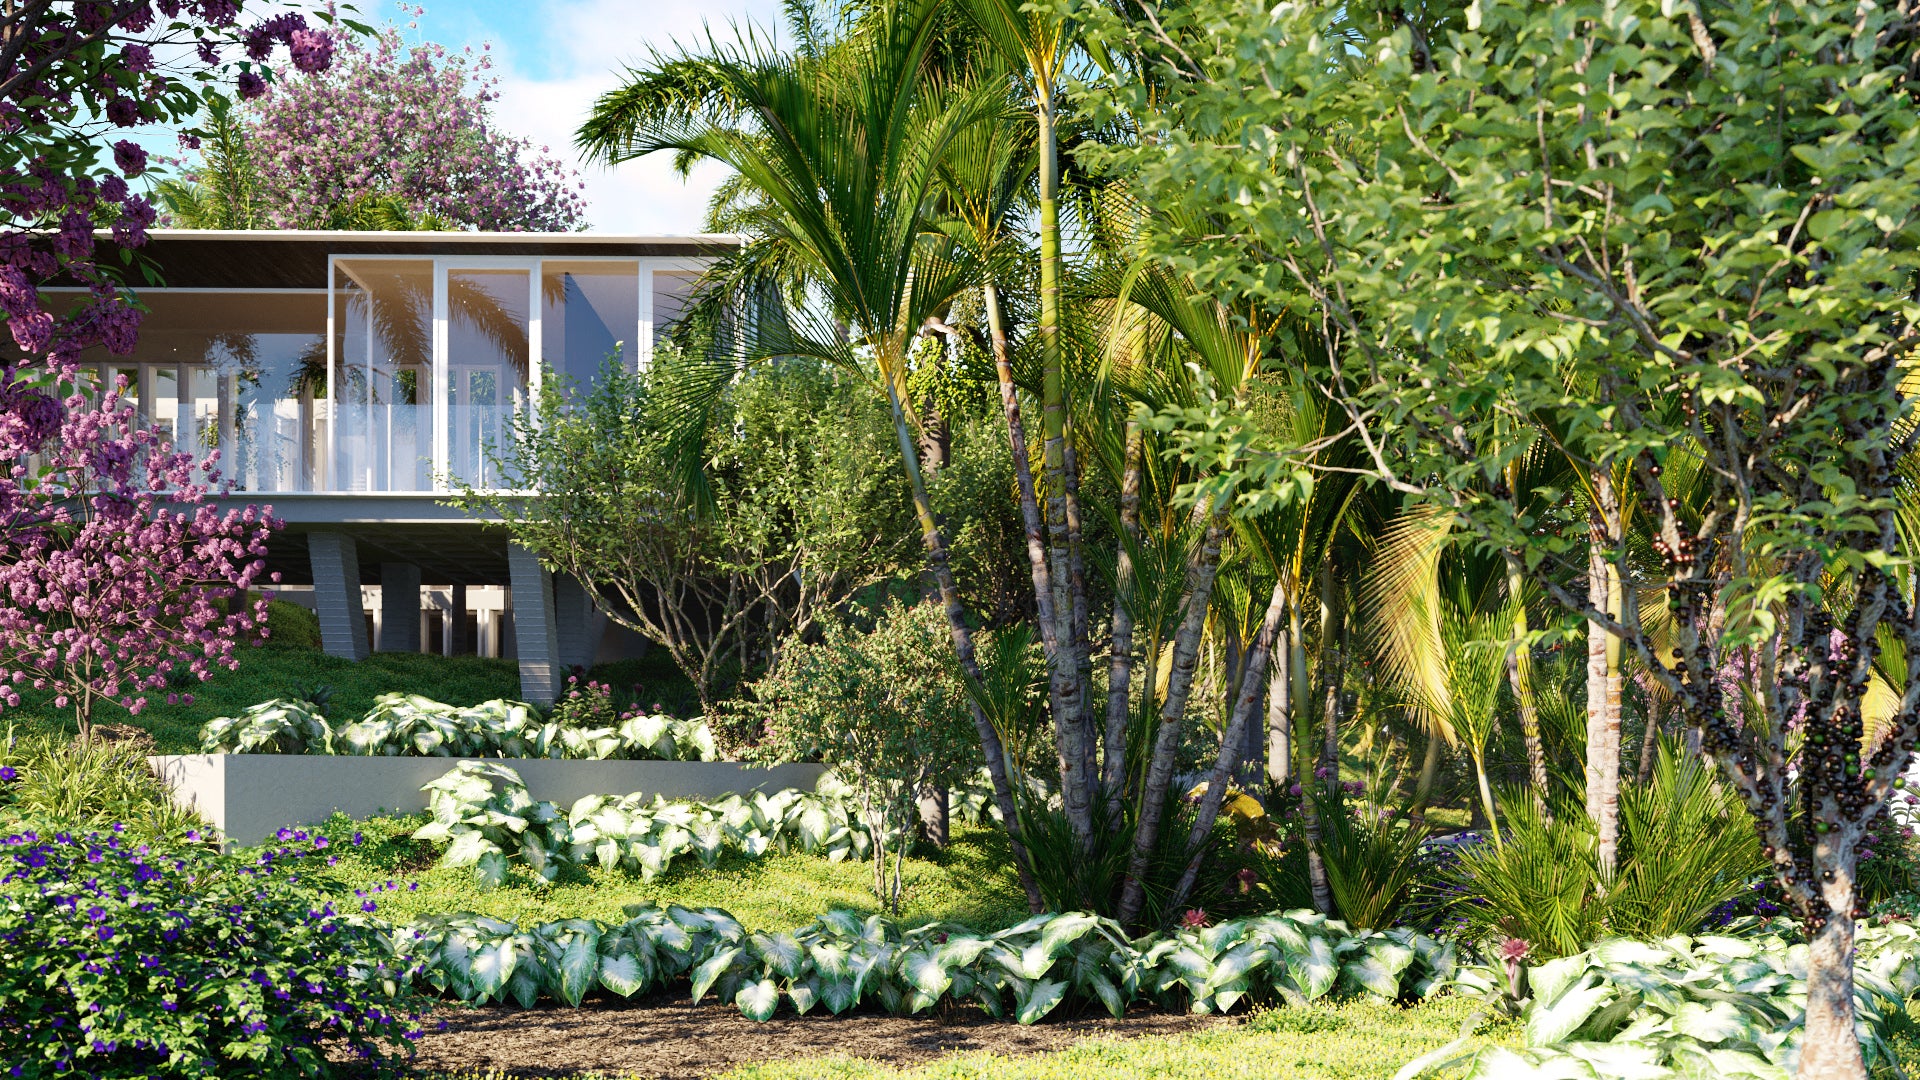 Bundle 32 - Brazilian Home & Garden Plants (3D Model)